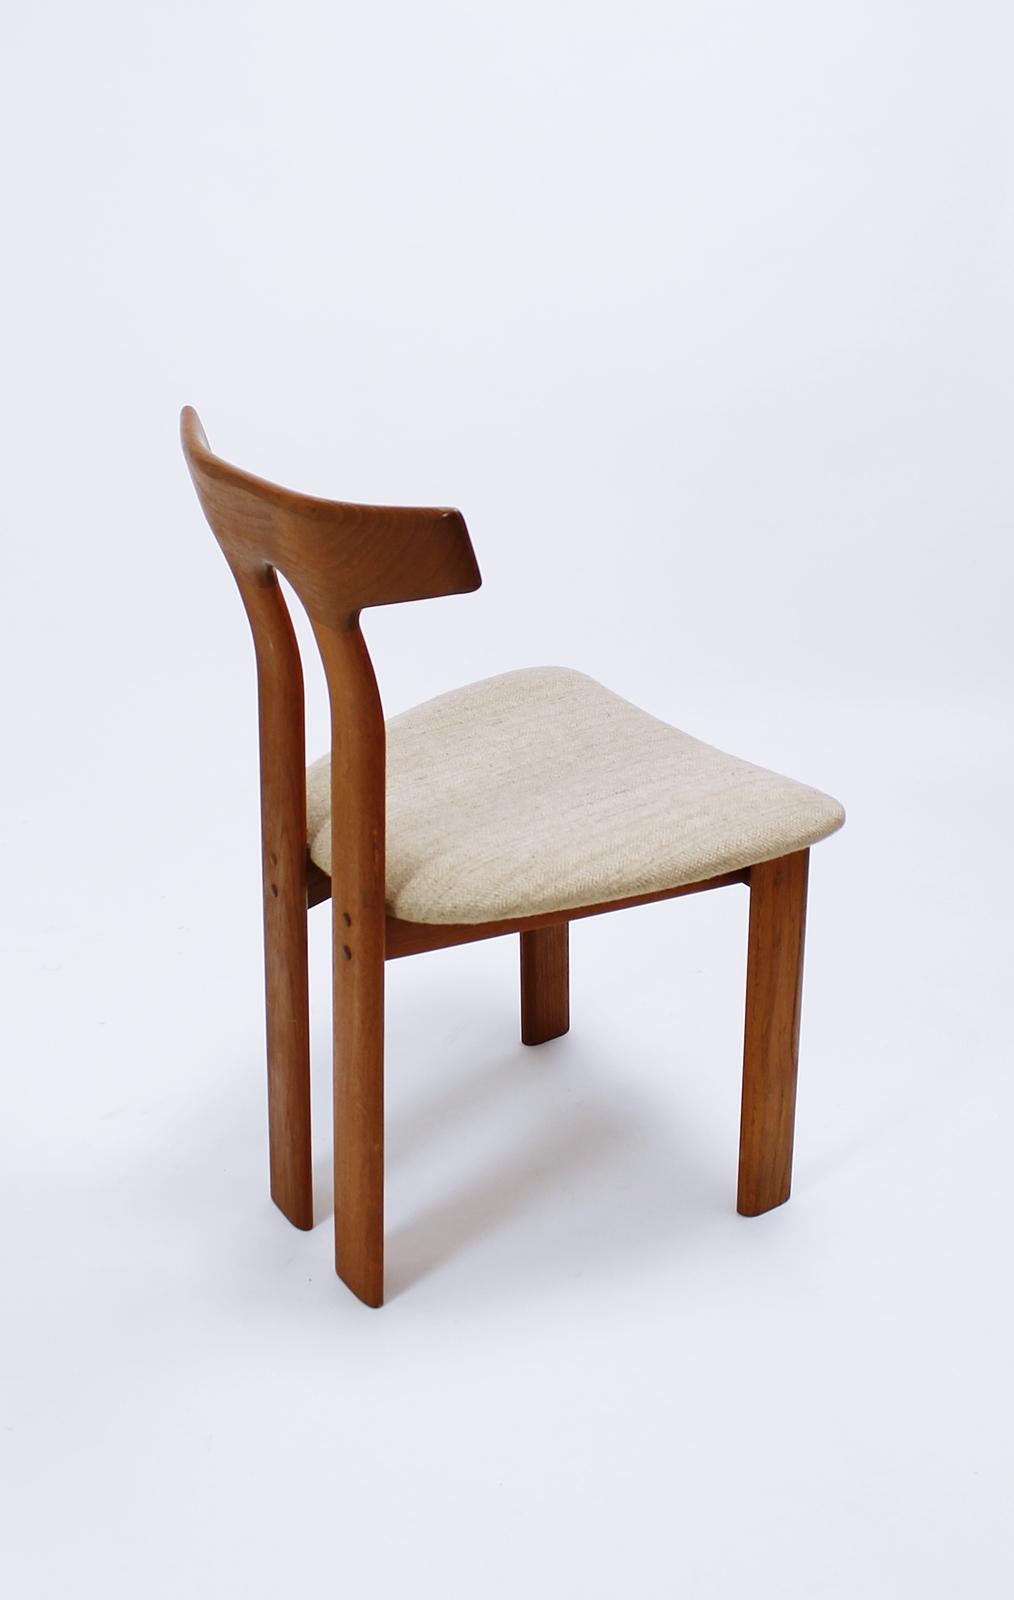 20th Century Mid-Century Modern Teak Chairs by Vamdrup, Denmark, 1970s